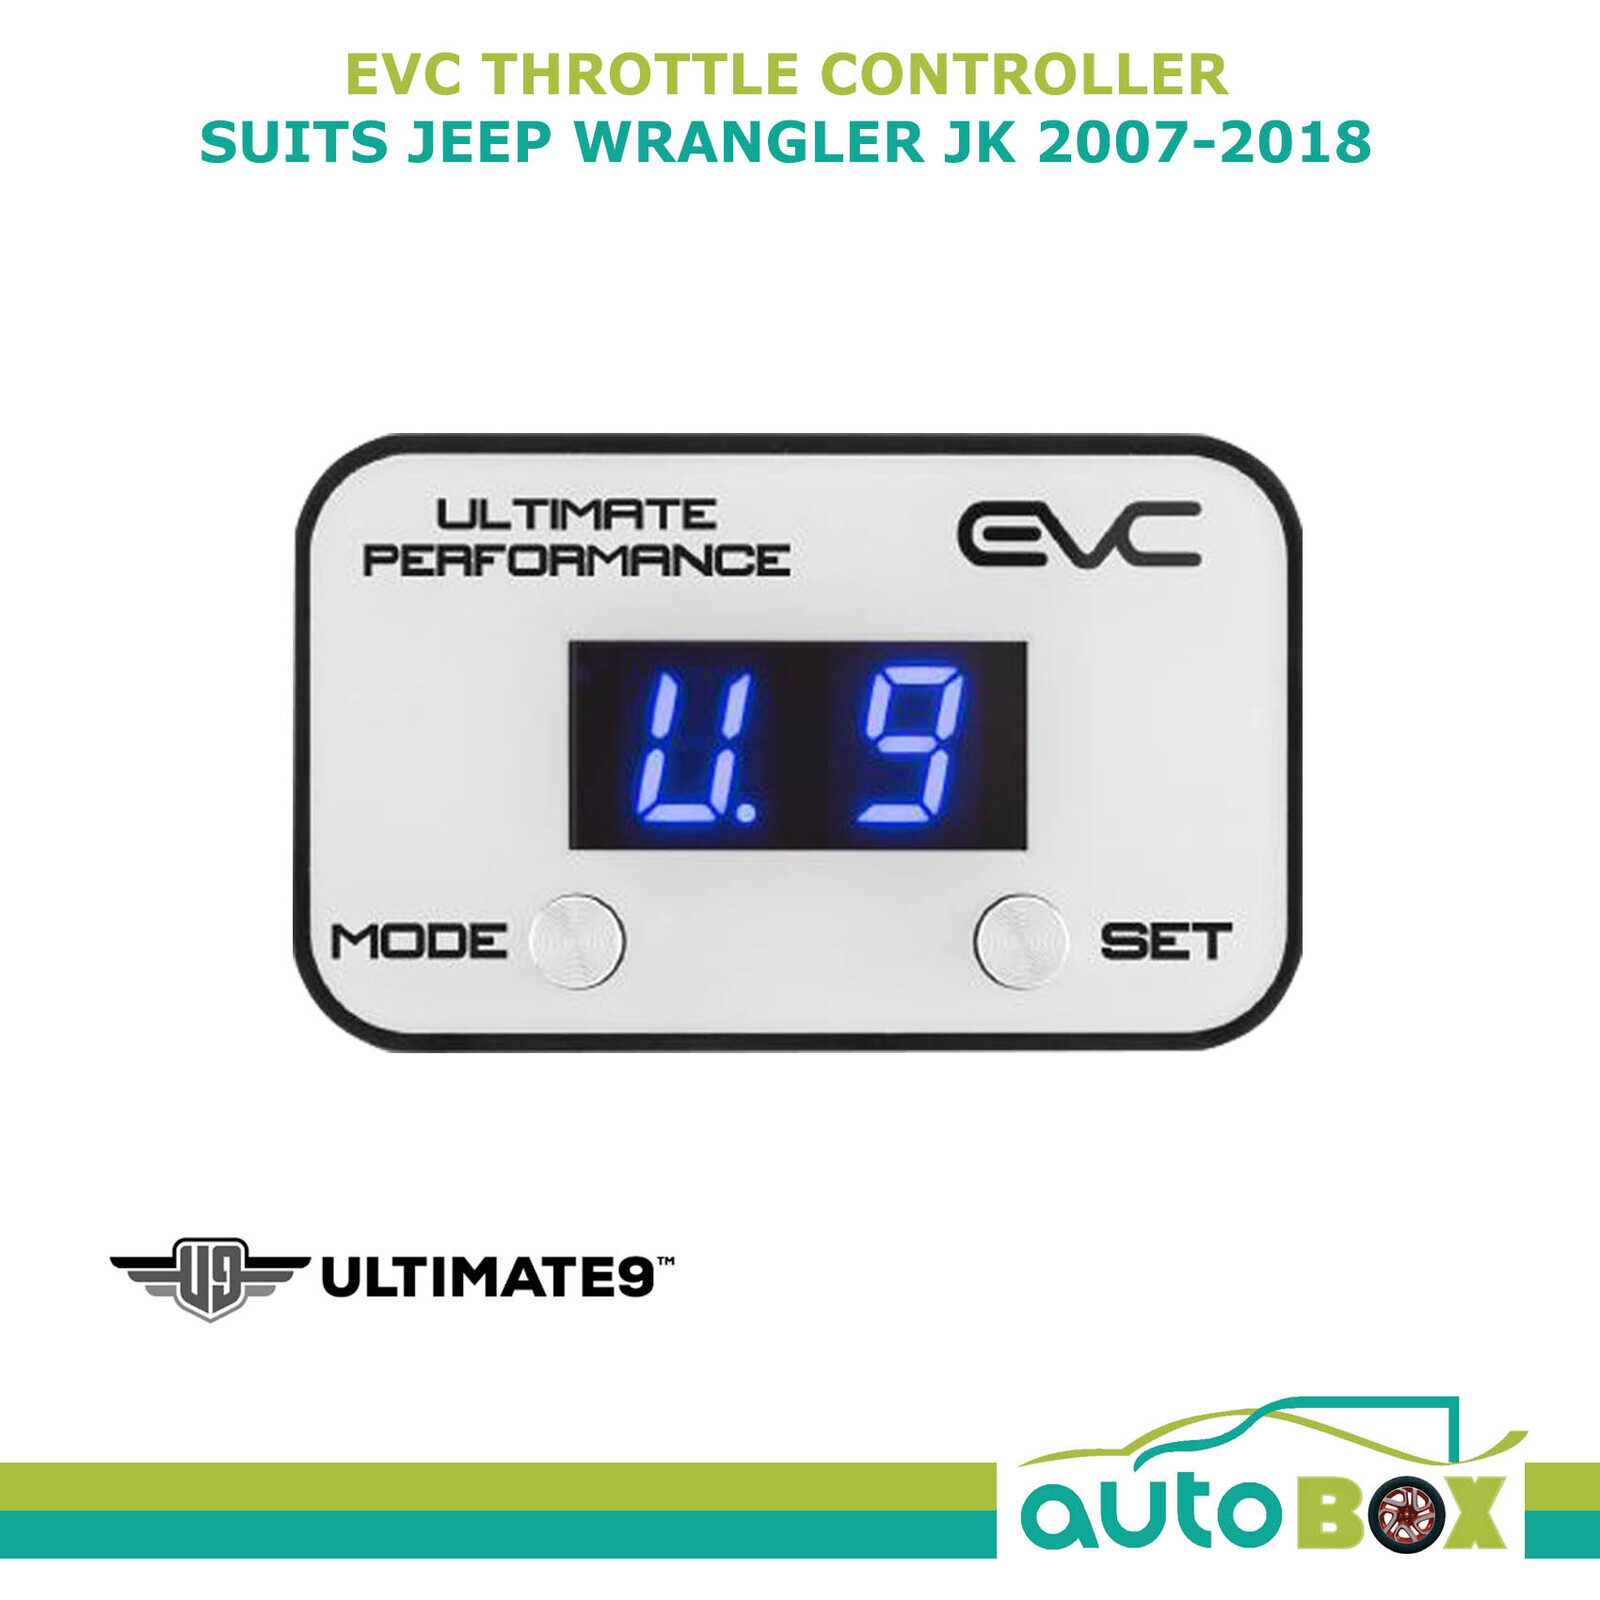 EVC Ultimate9 Throttle Controller Suits Jeep Wrangler JK 2007-2018 -  ULTIMATE9